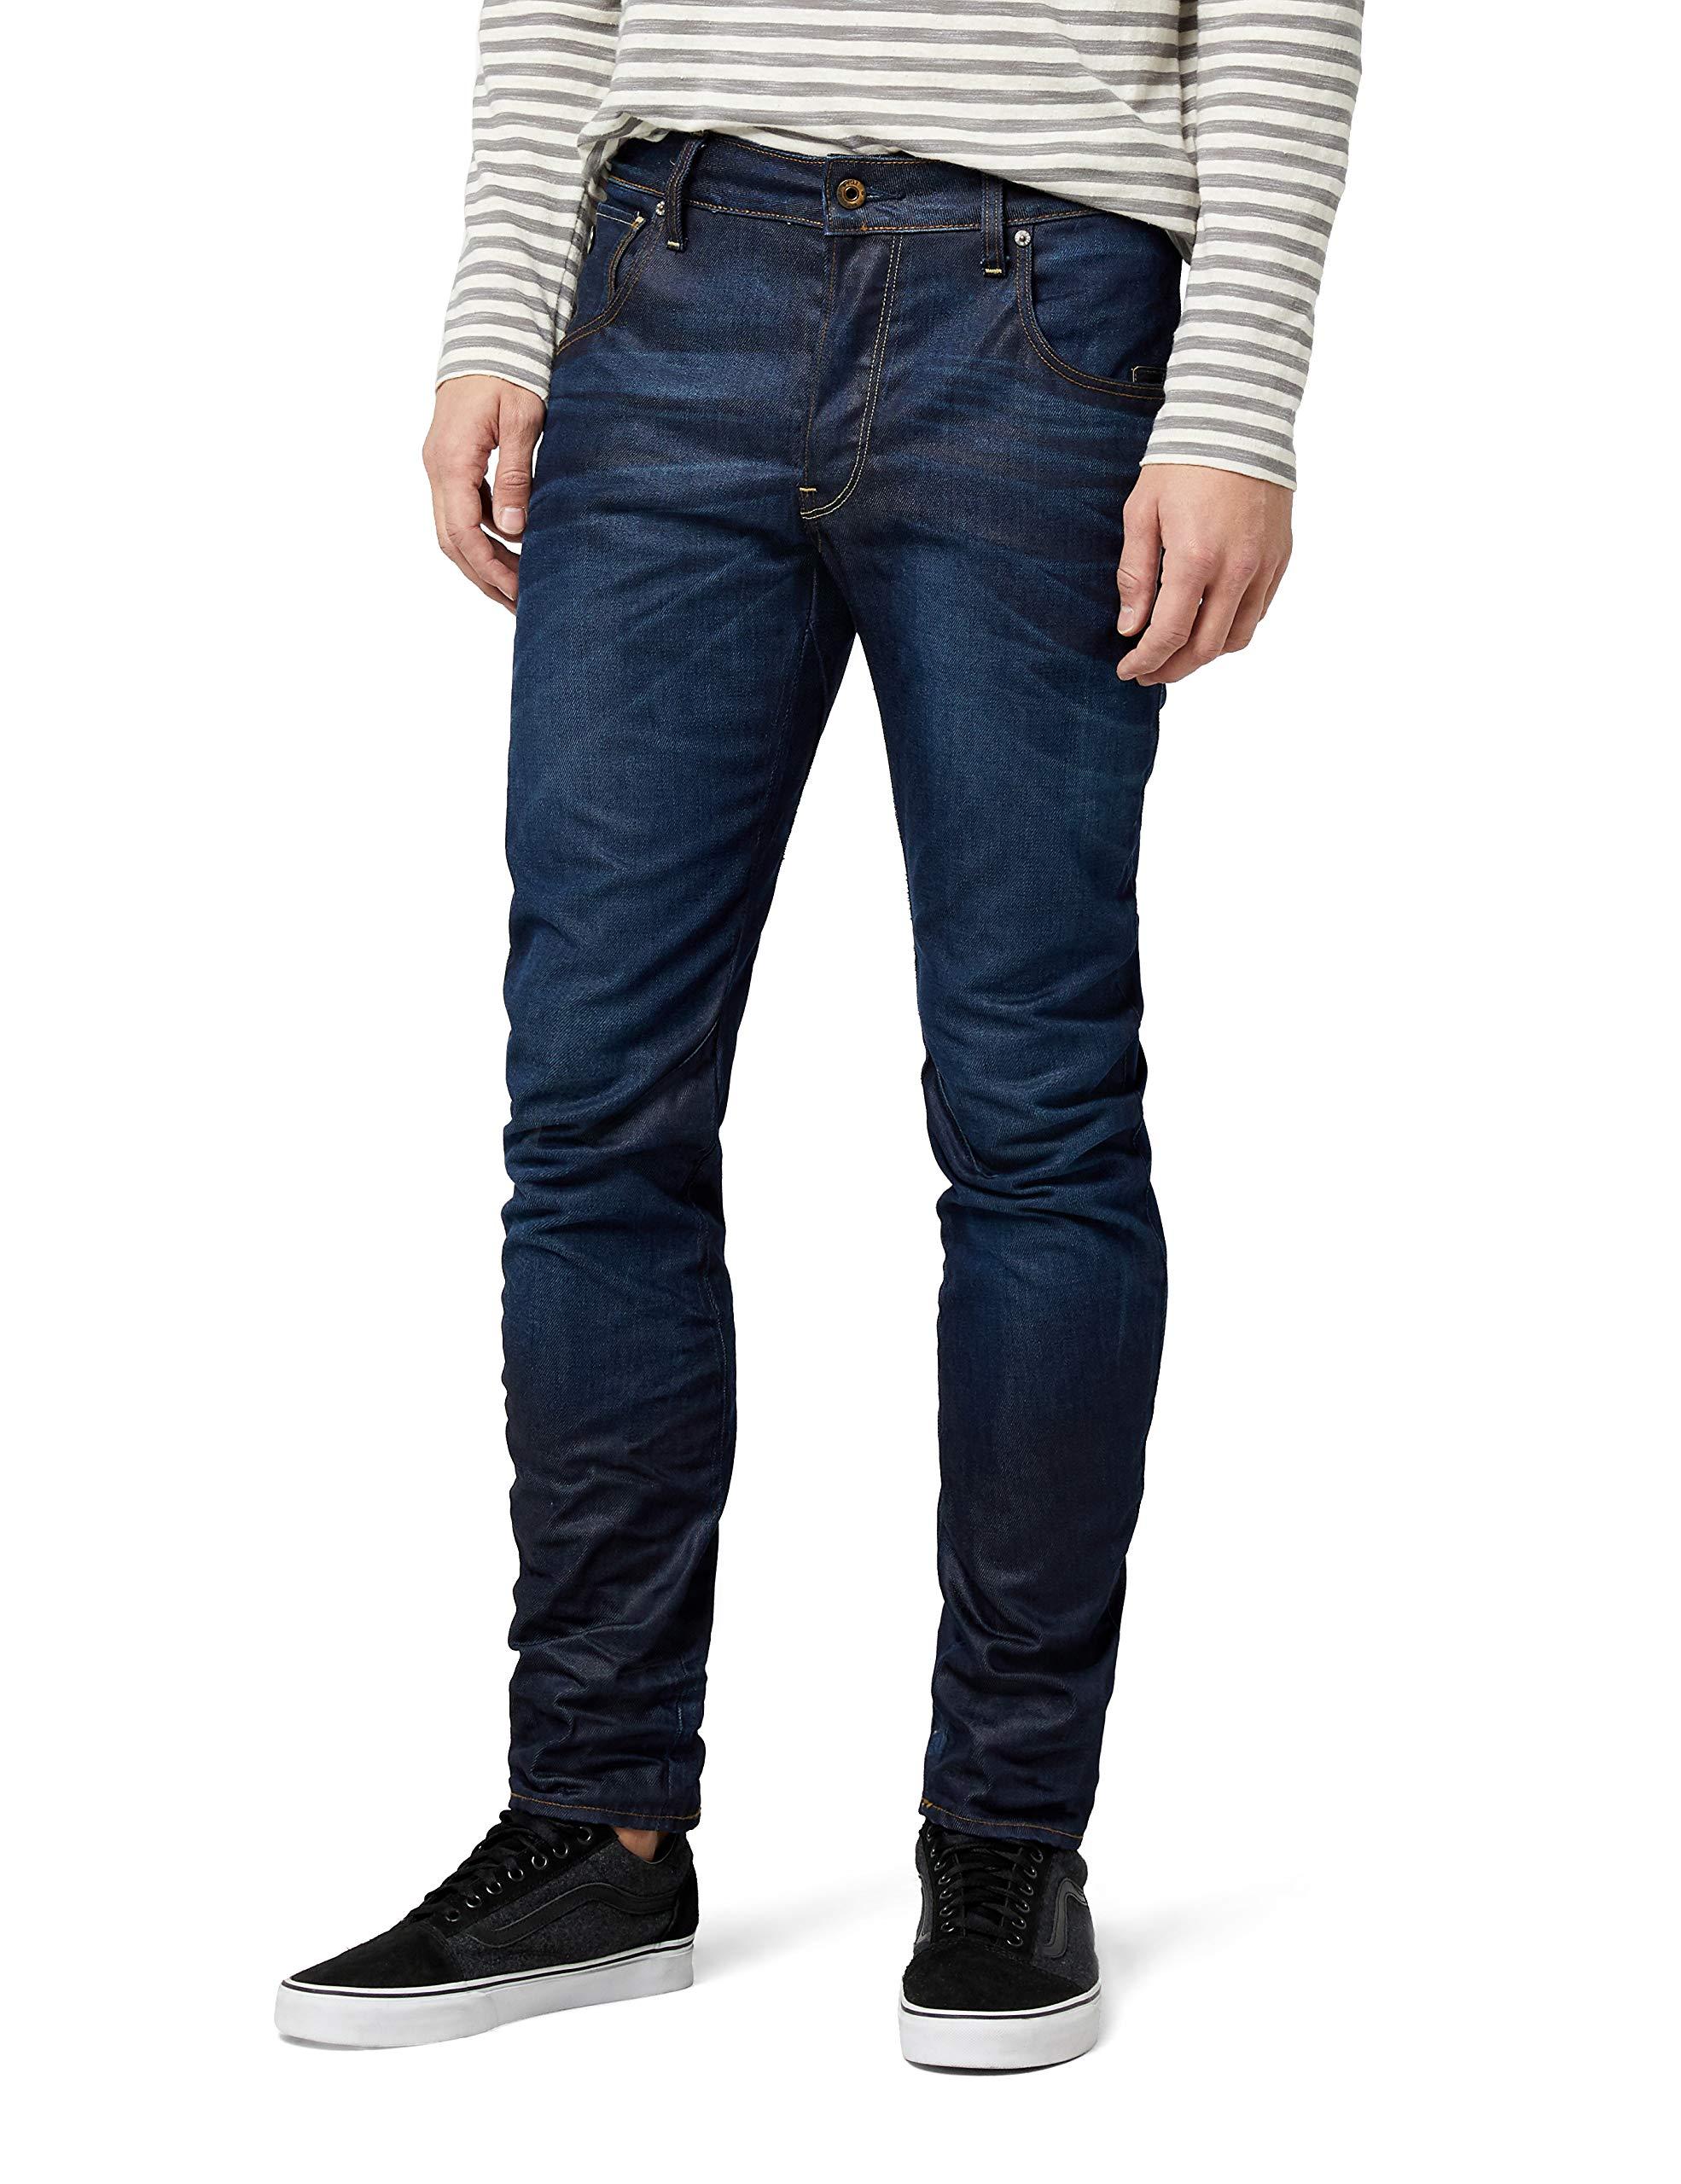 G-Star RAW Denim Arc 3d Slim Jeans in Blue for Men - Save 57% - Lyst